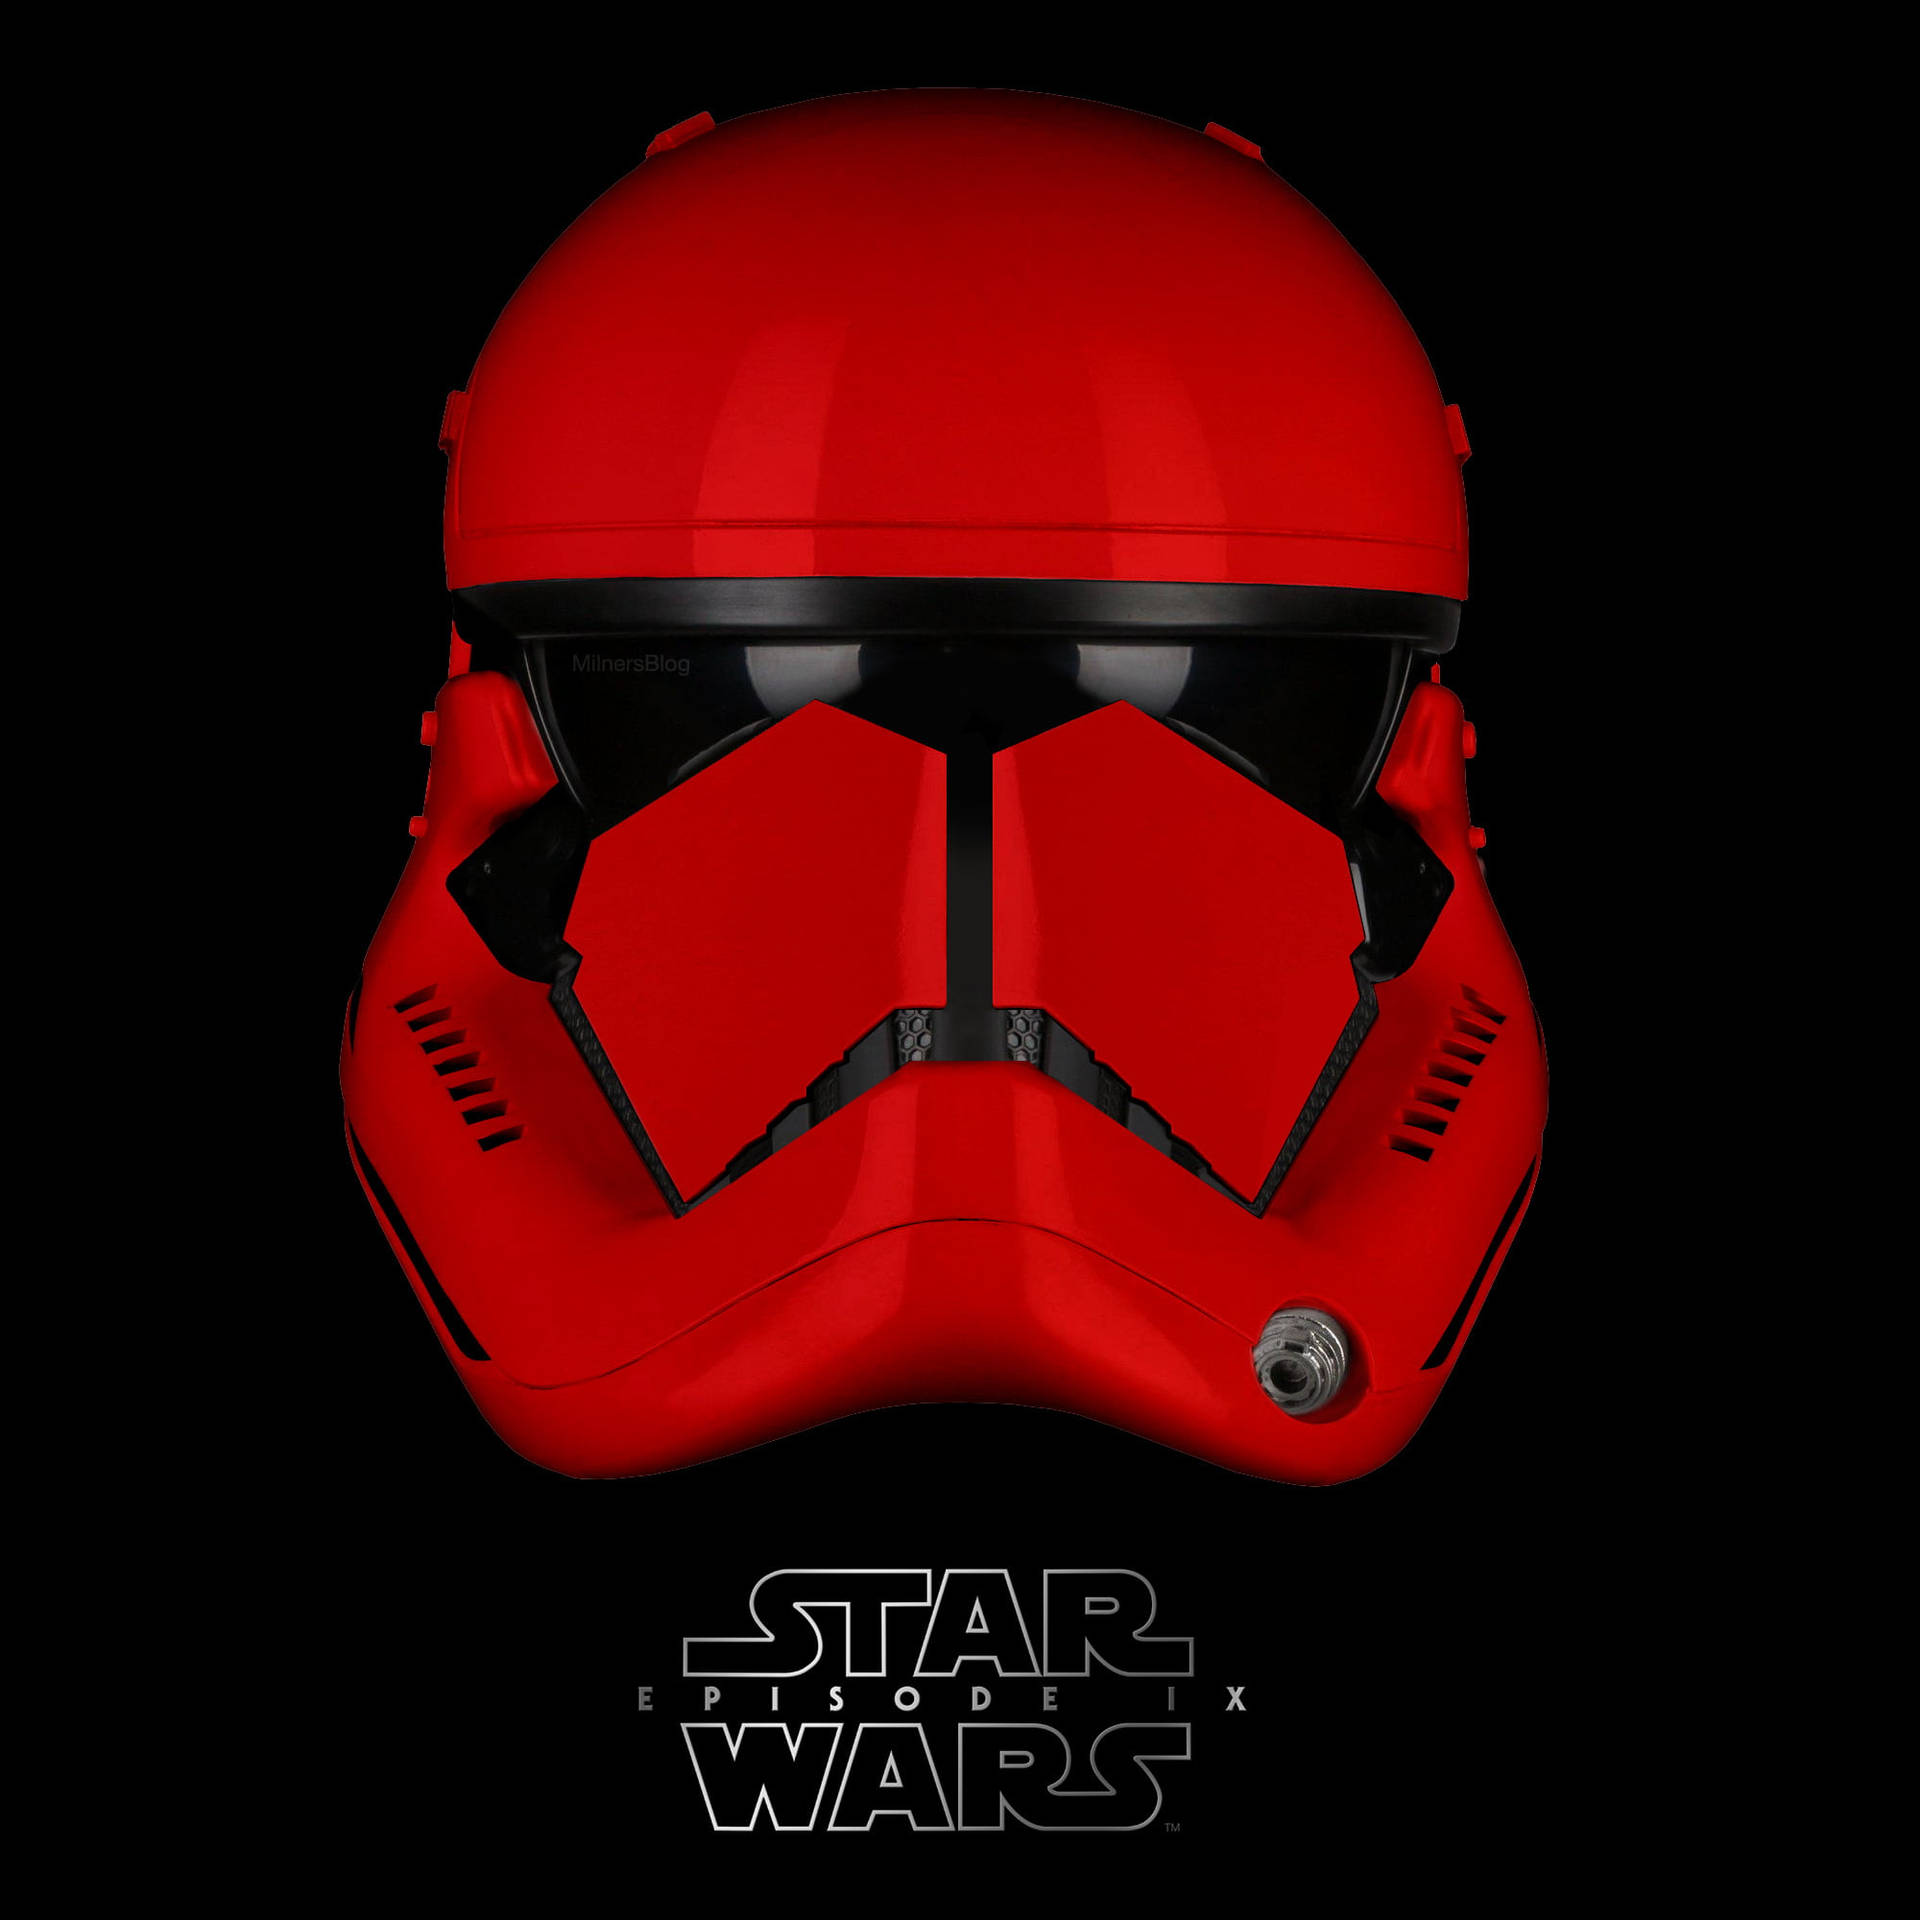 Star Wars Red Stormtrooper 3d Helmet Background